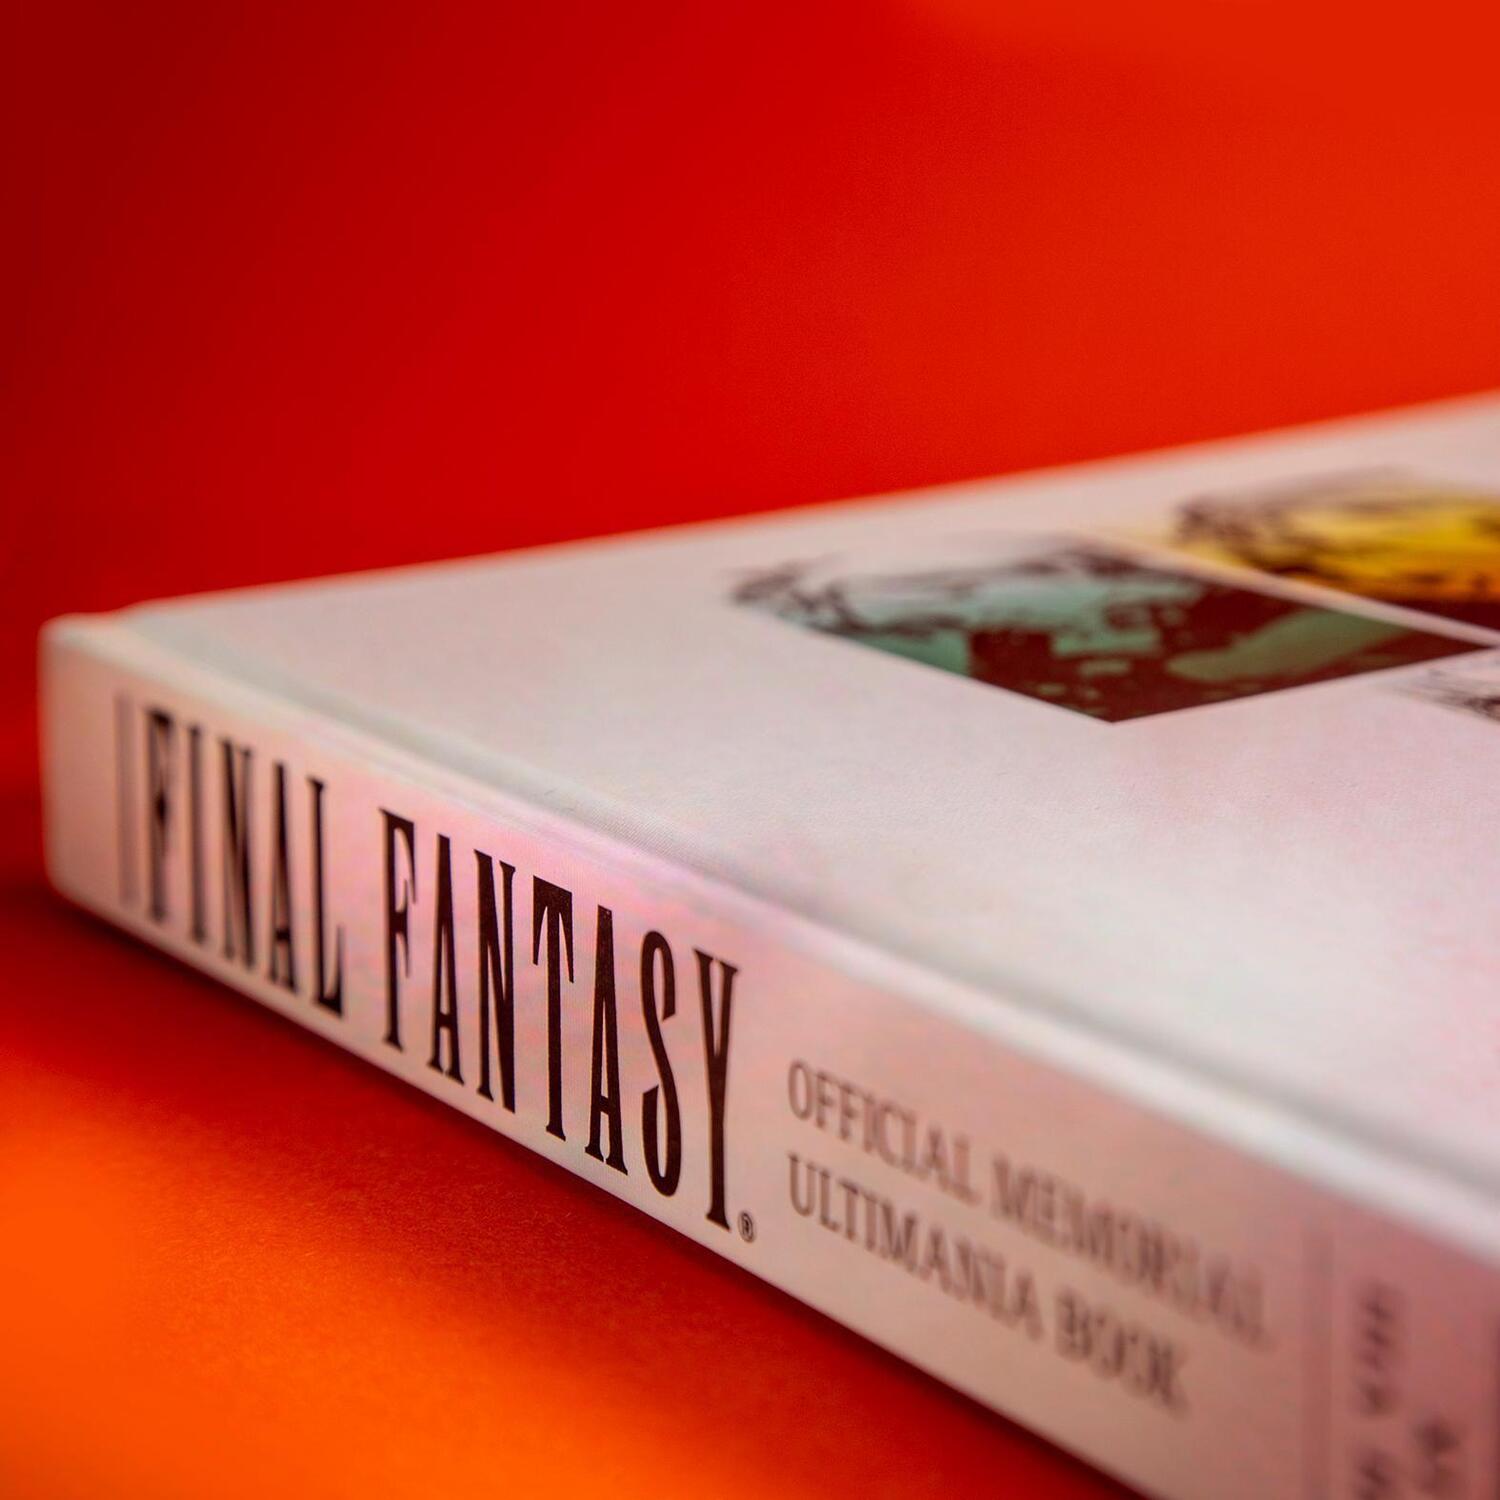 Bild: 9783551726889 | Final Fantasy - Official Memorial Ultimania Book VII VIII IX | Buch